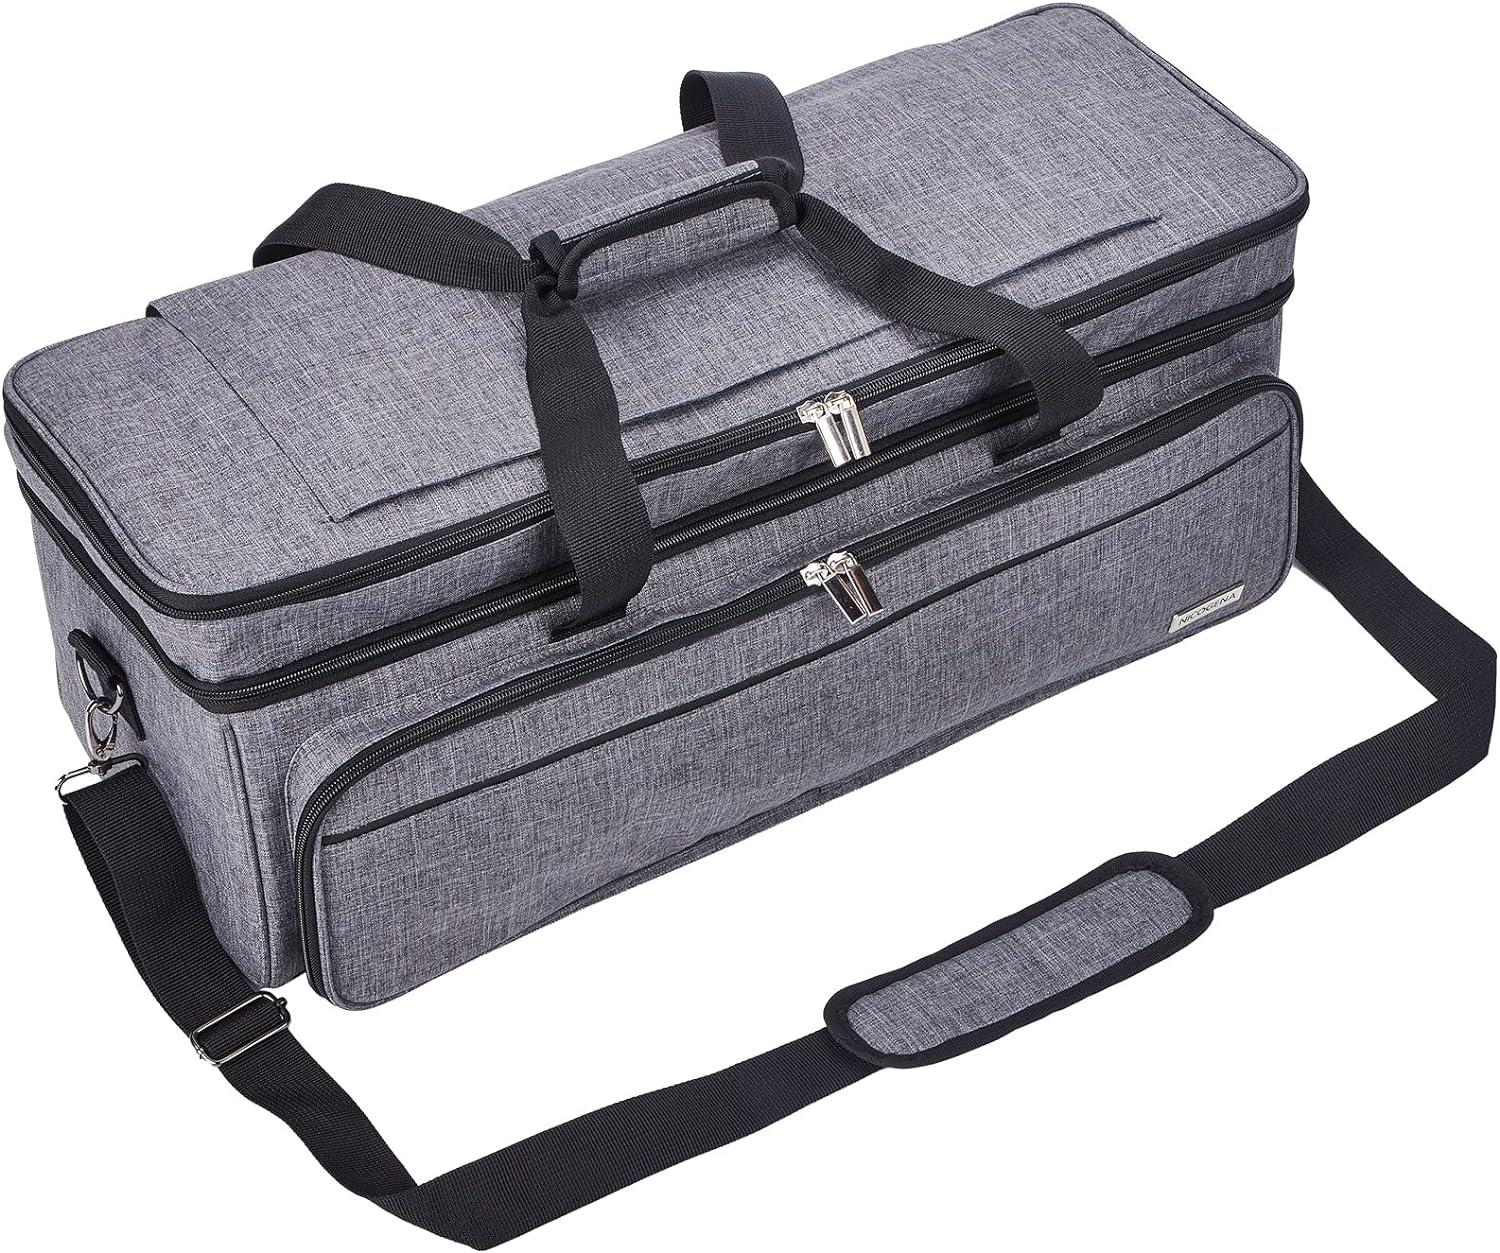 Carrying Case for Cricut Explore Air 2, Cricut Maker - Mat Pocket